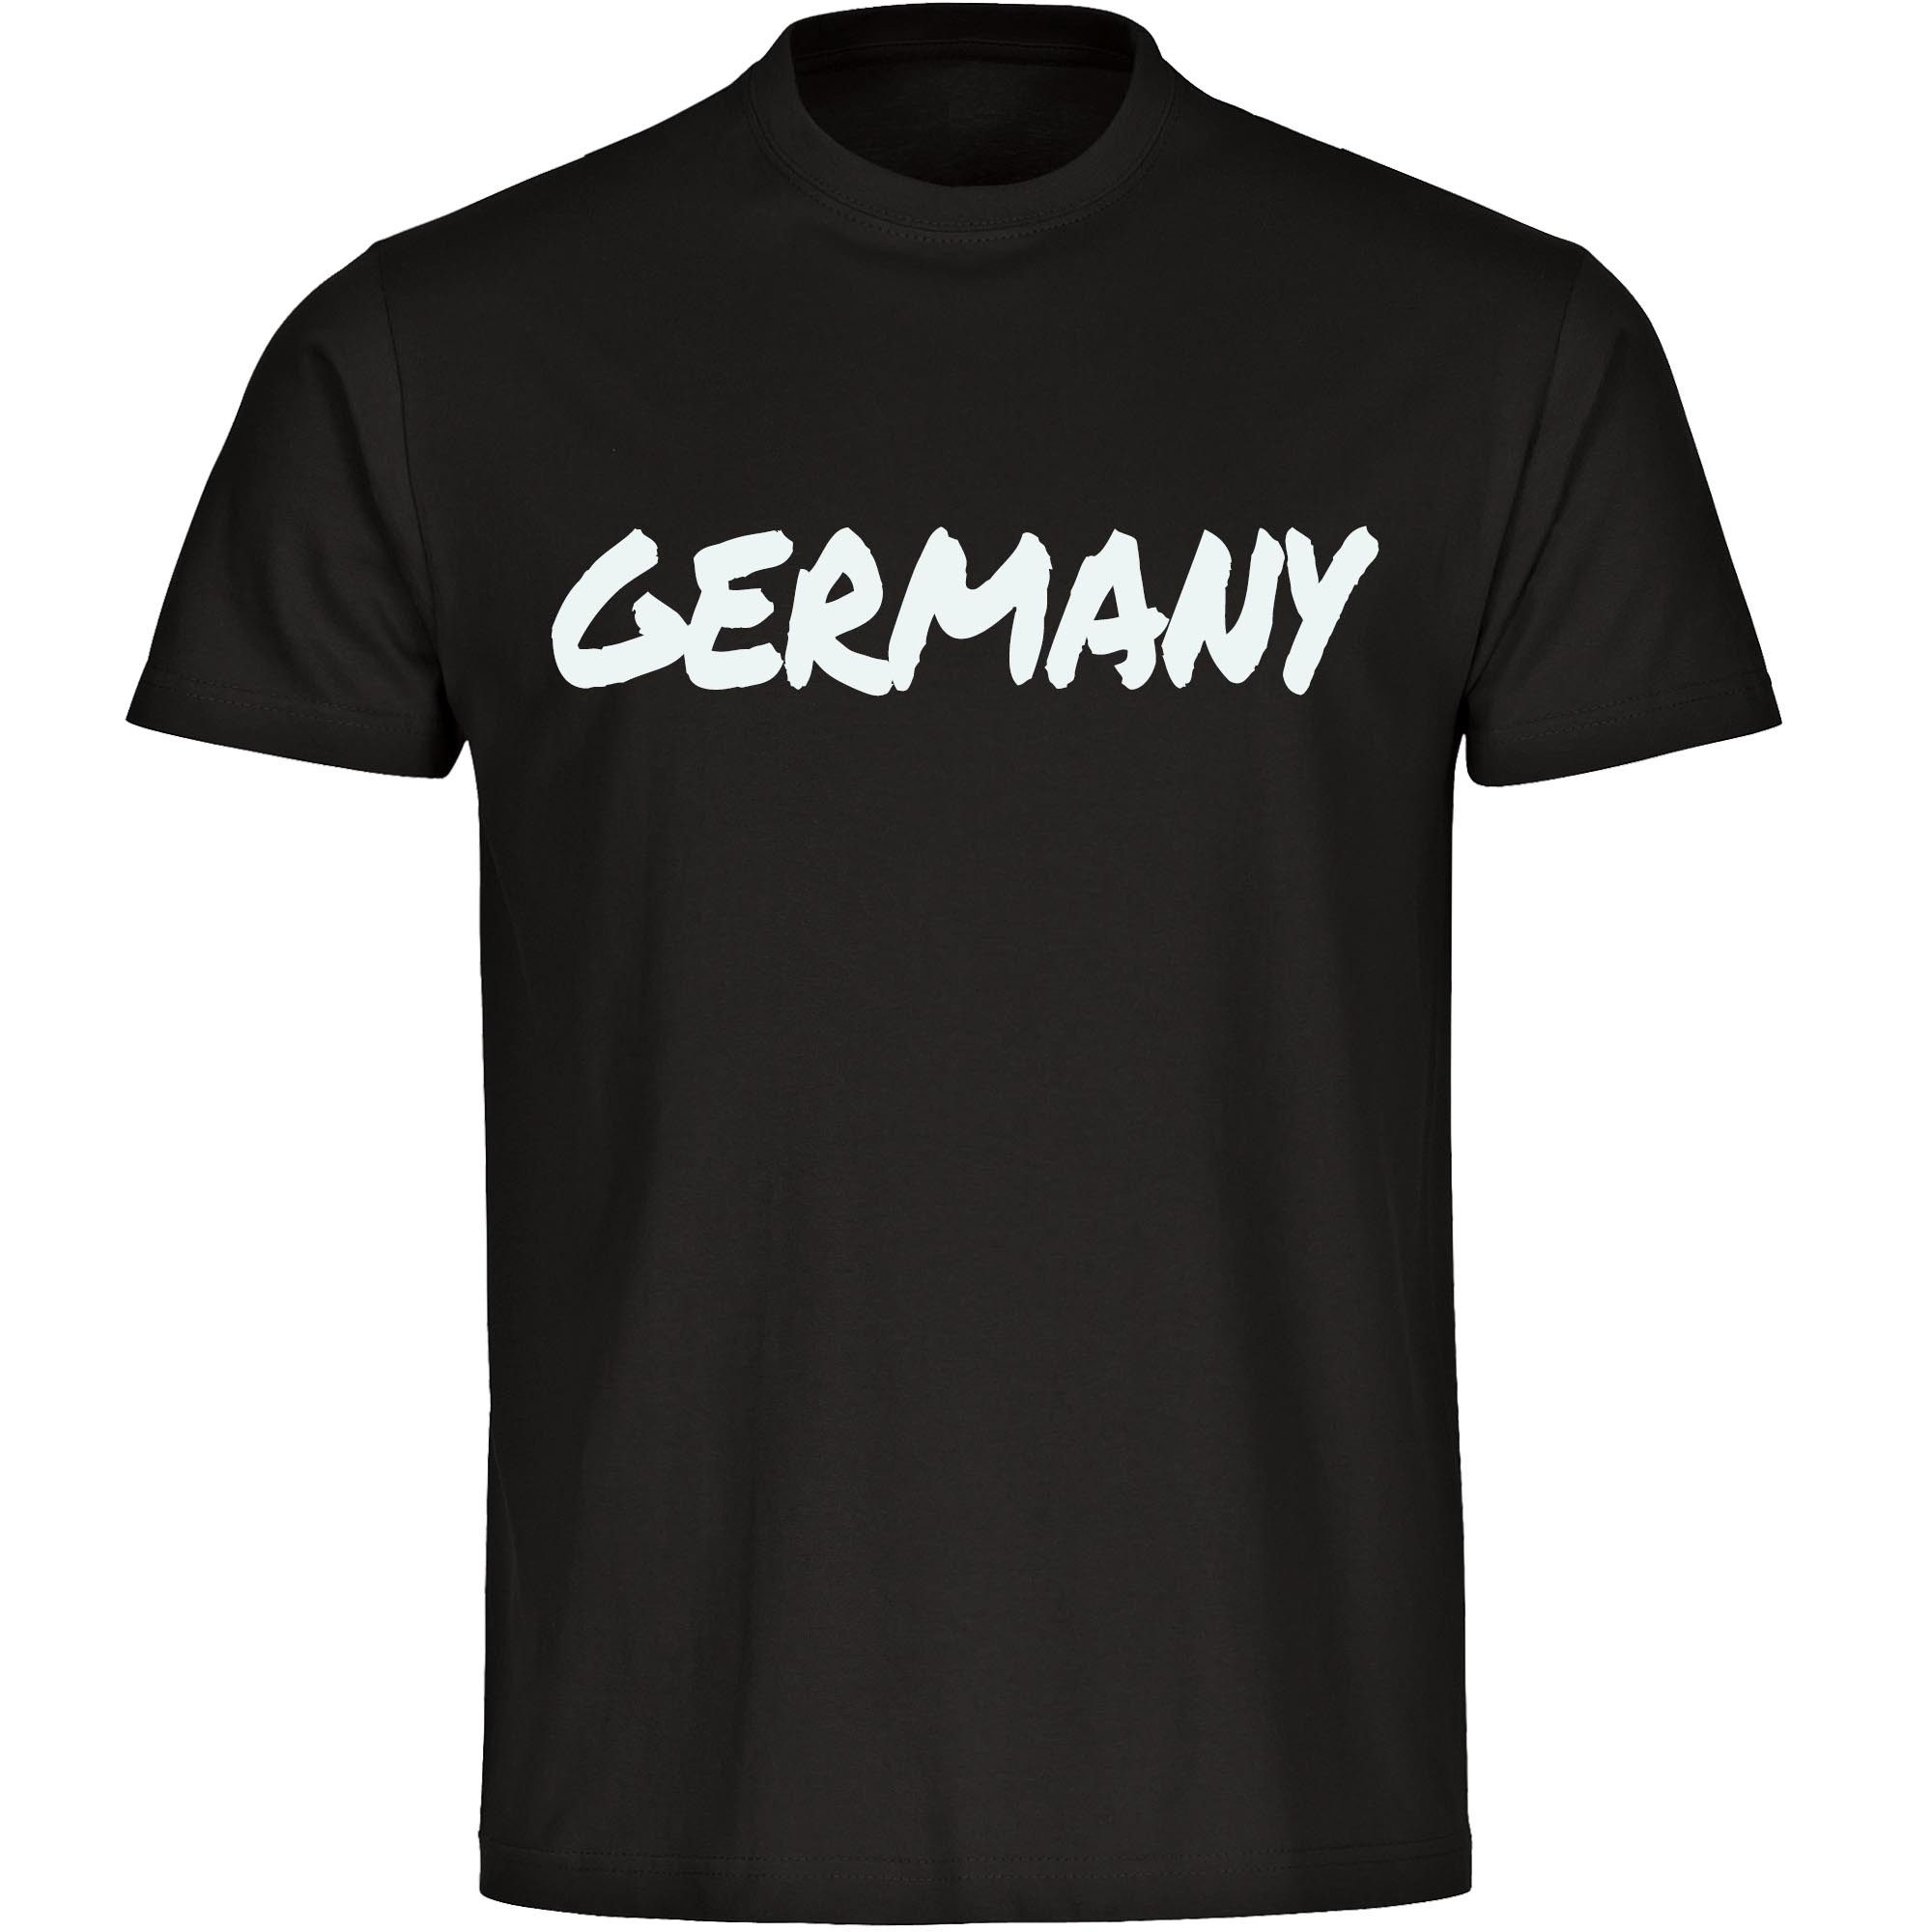 multifanshop T-Shirt Herren Germany - Textmarker - Männer